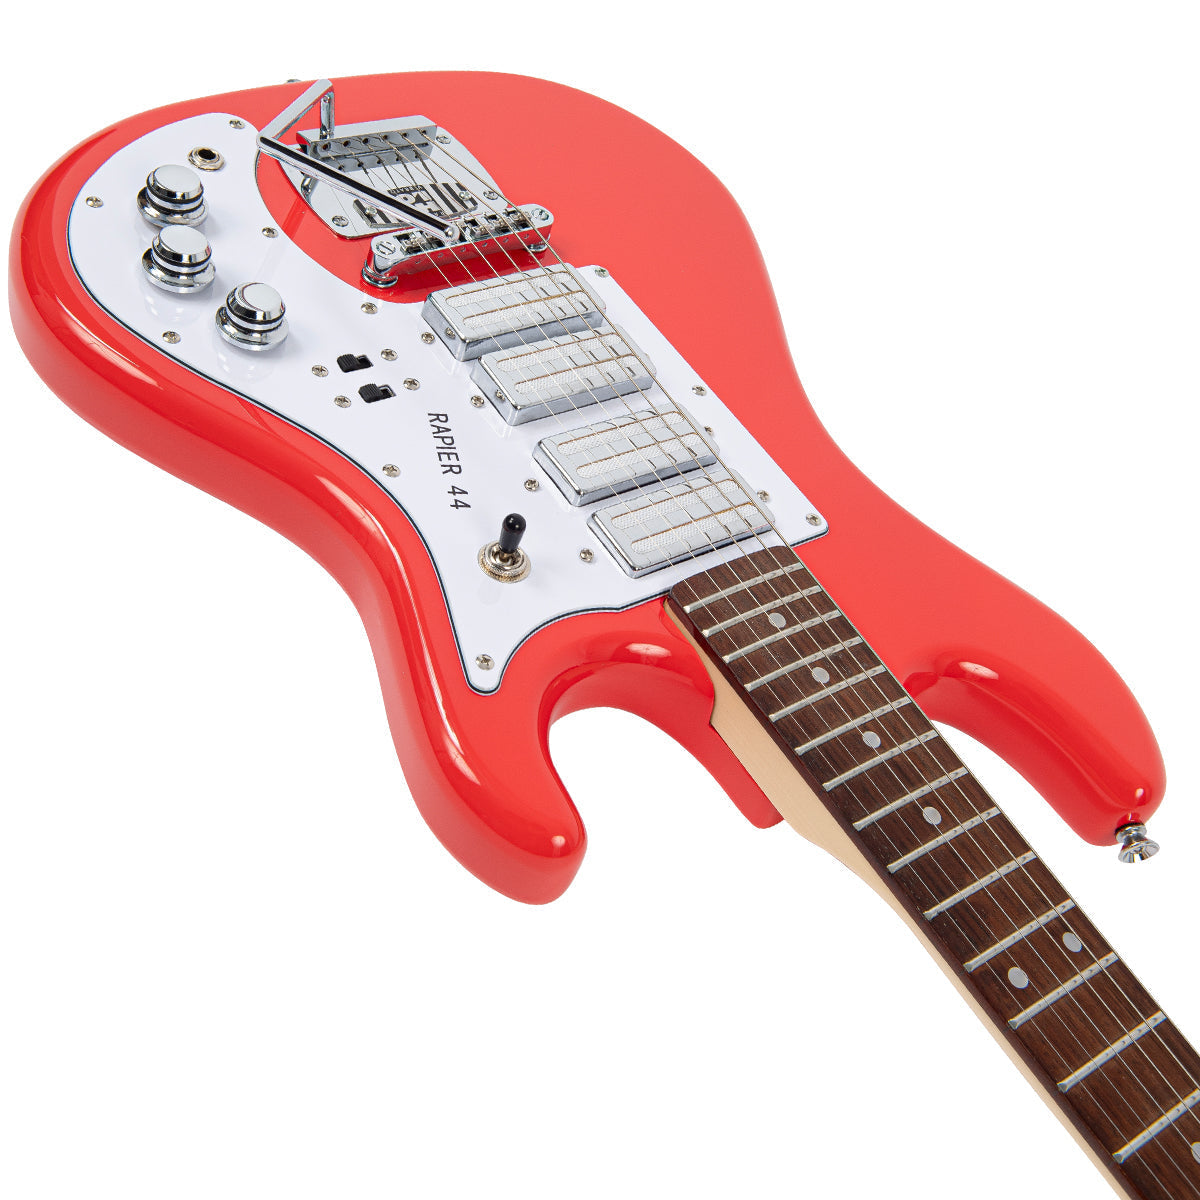 Rapier 44 Electric Guitar ~ Fiesta Red, Electric Guitar for sale at Richards Guitars.